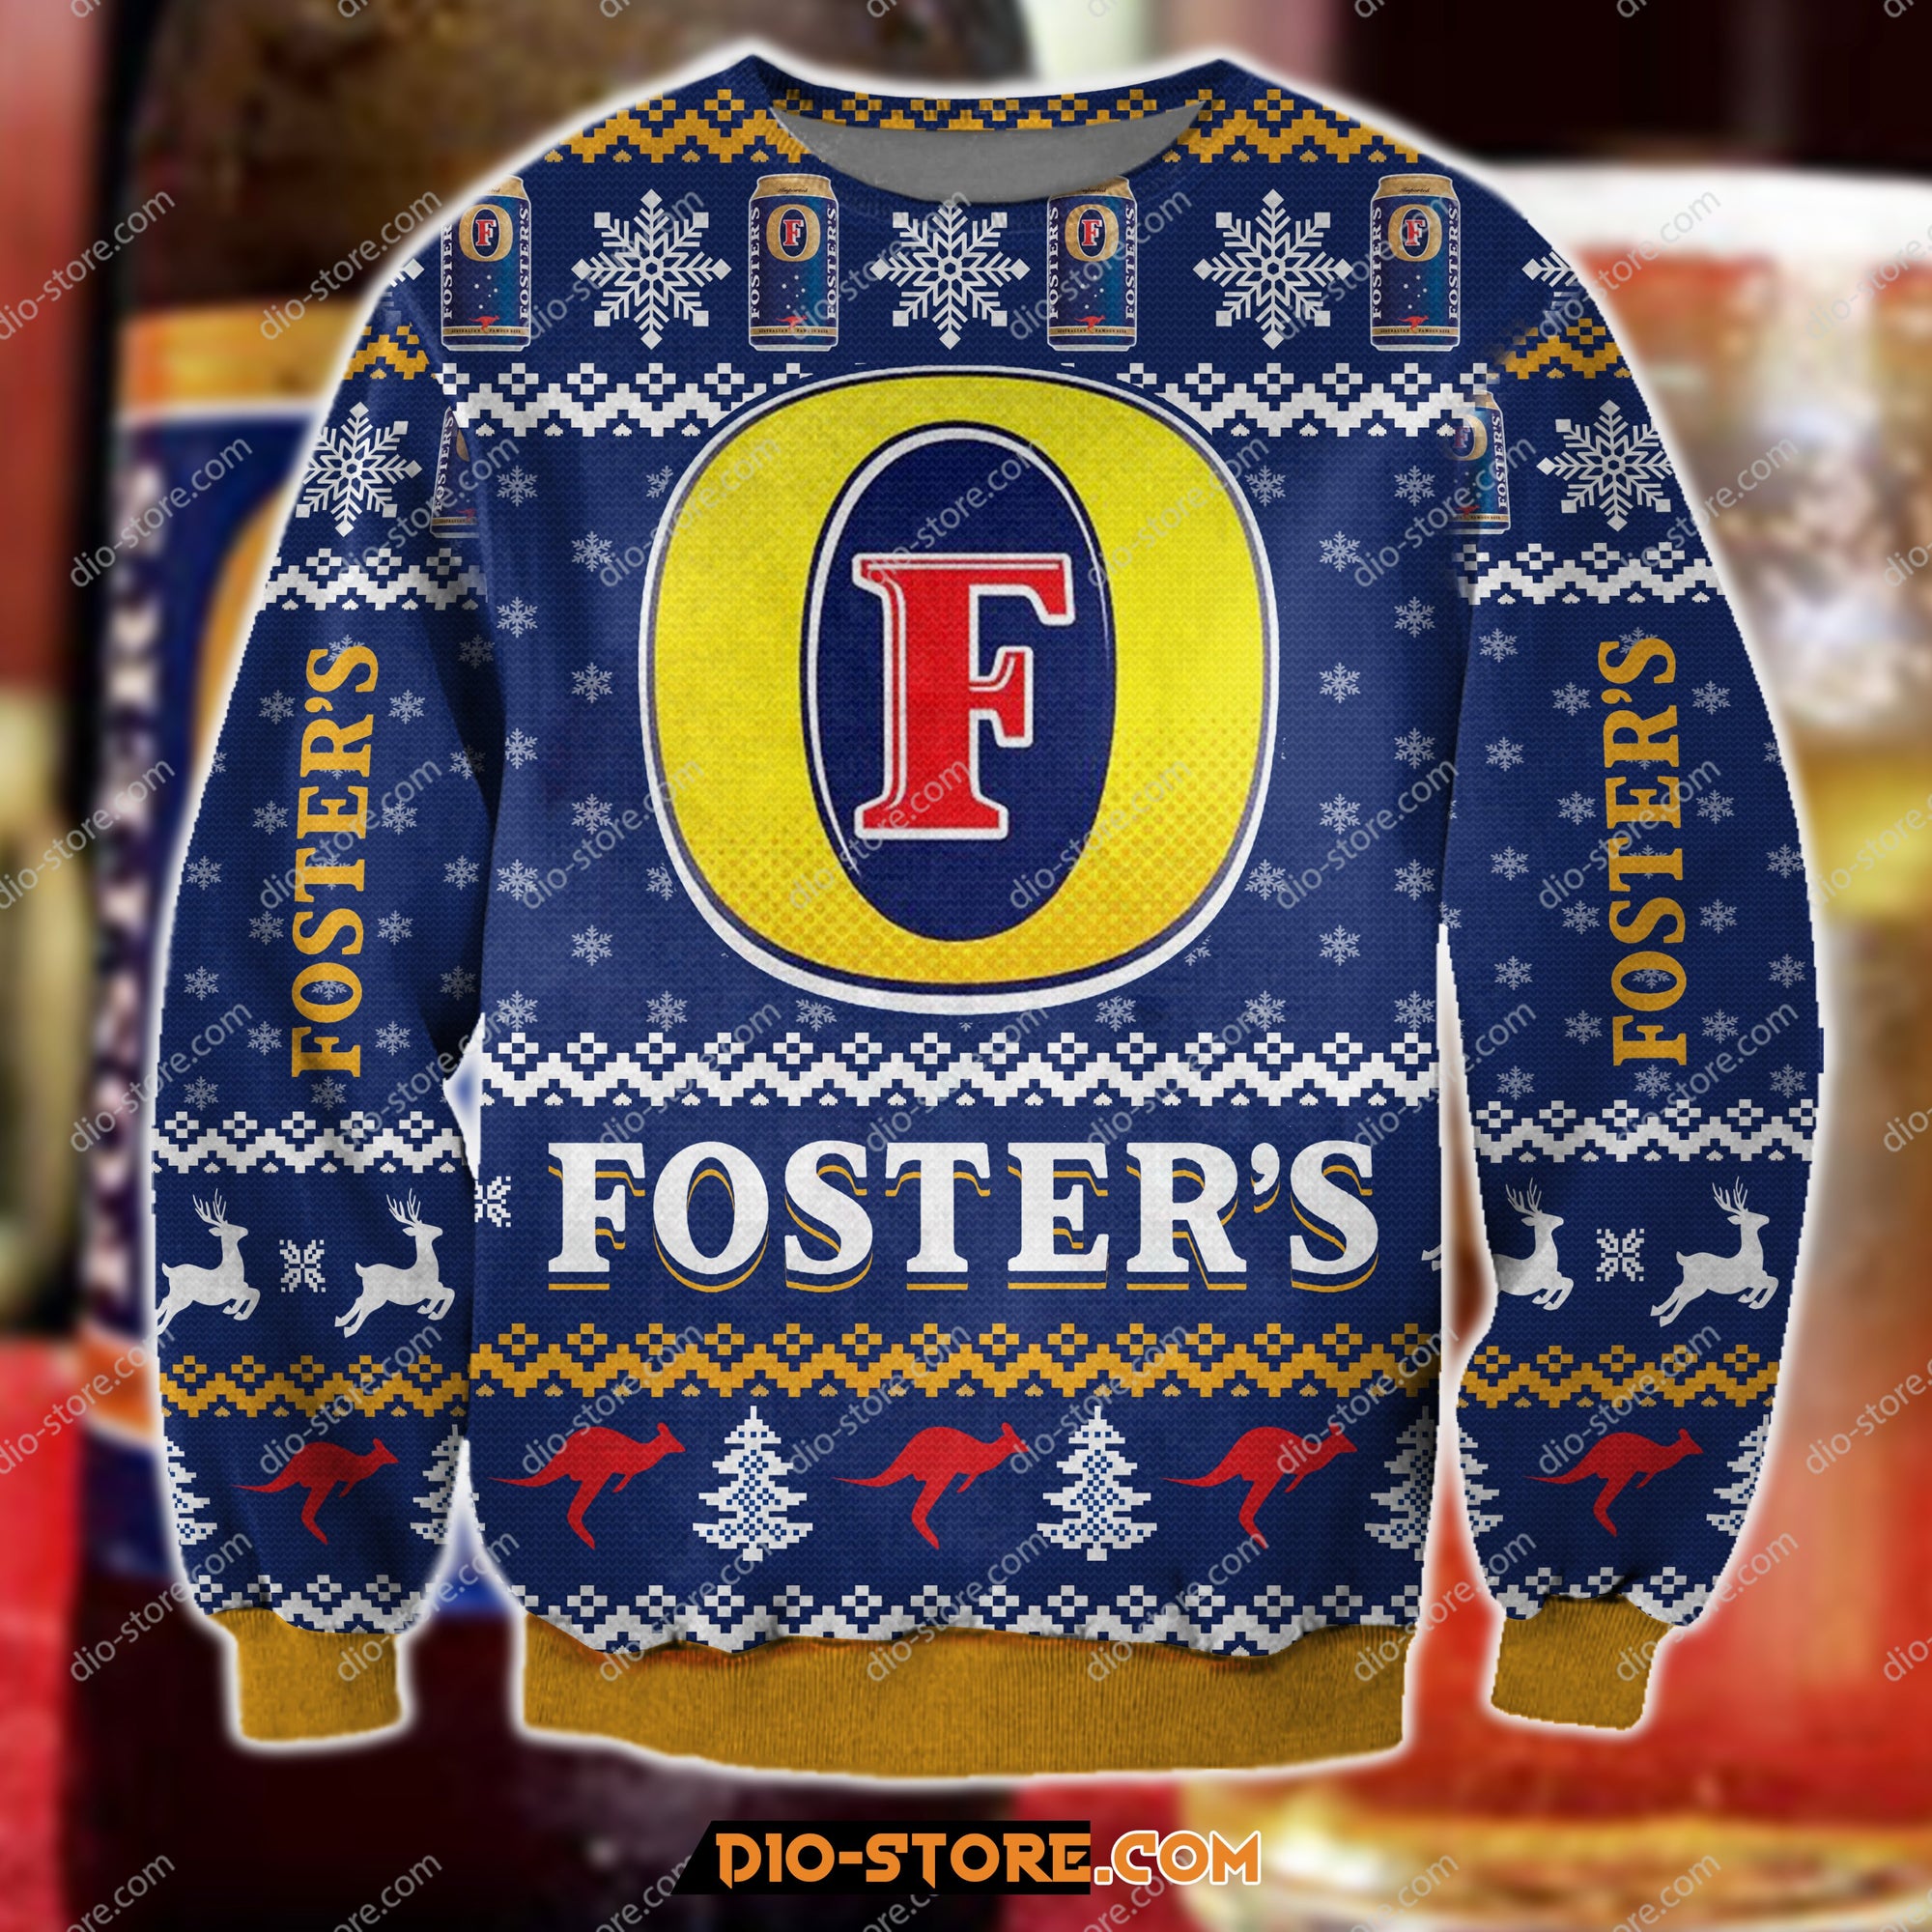 Fosters Beer Knitting Pattern 3D Print Ugly Christmas Sweatshirt Hoodie All Over Printed Cint10379